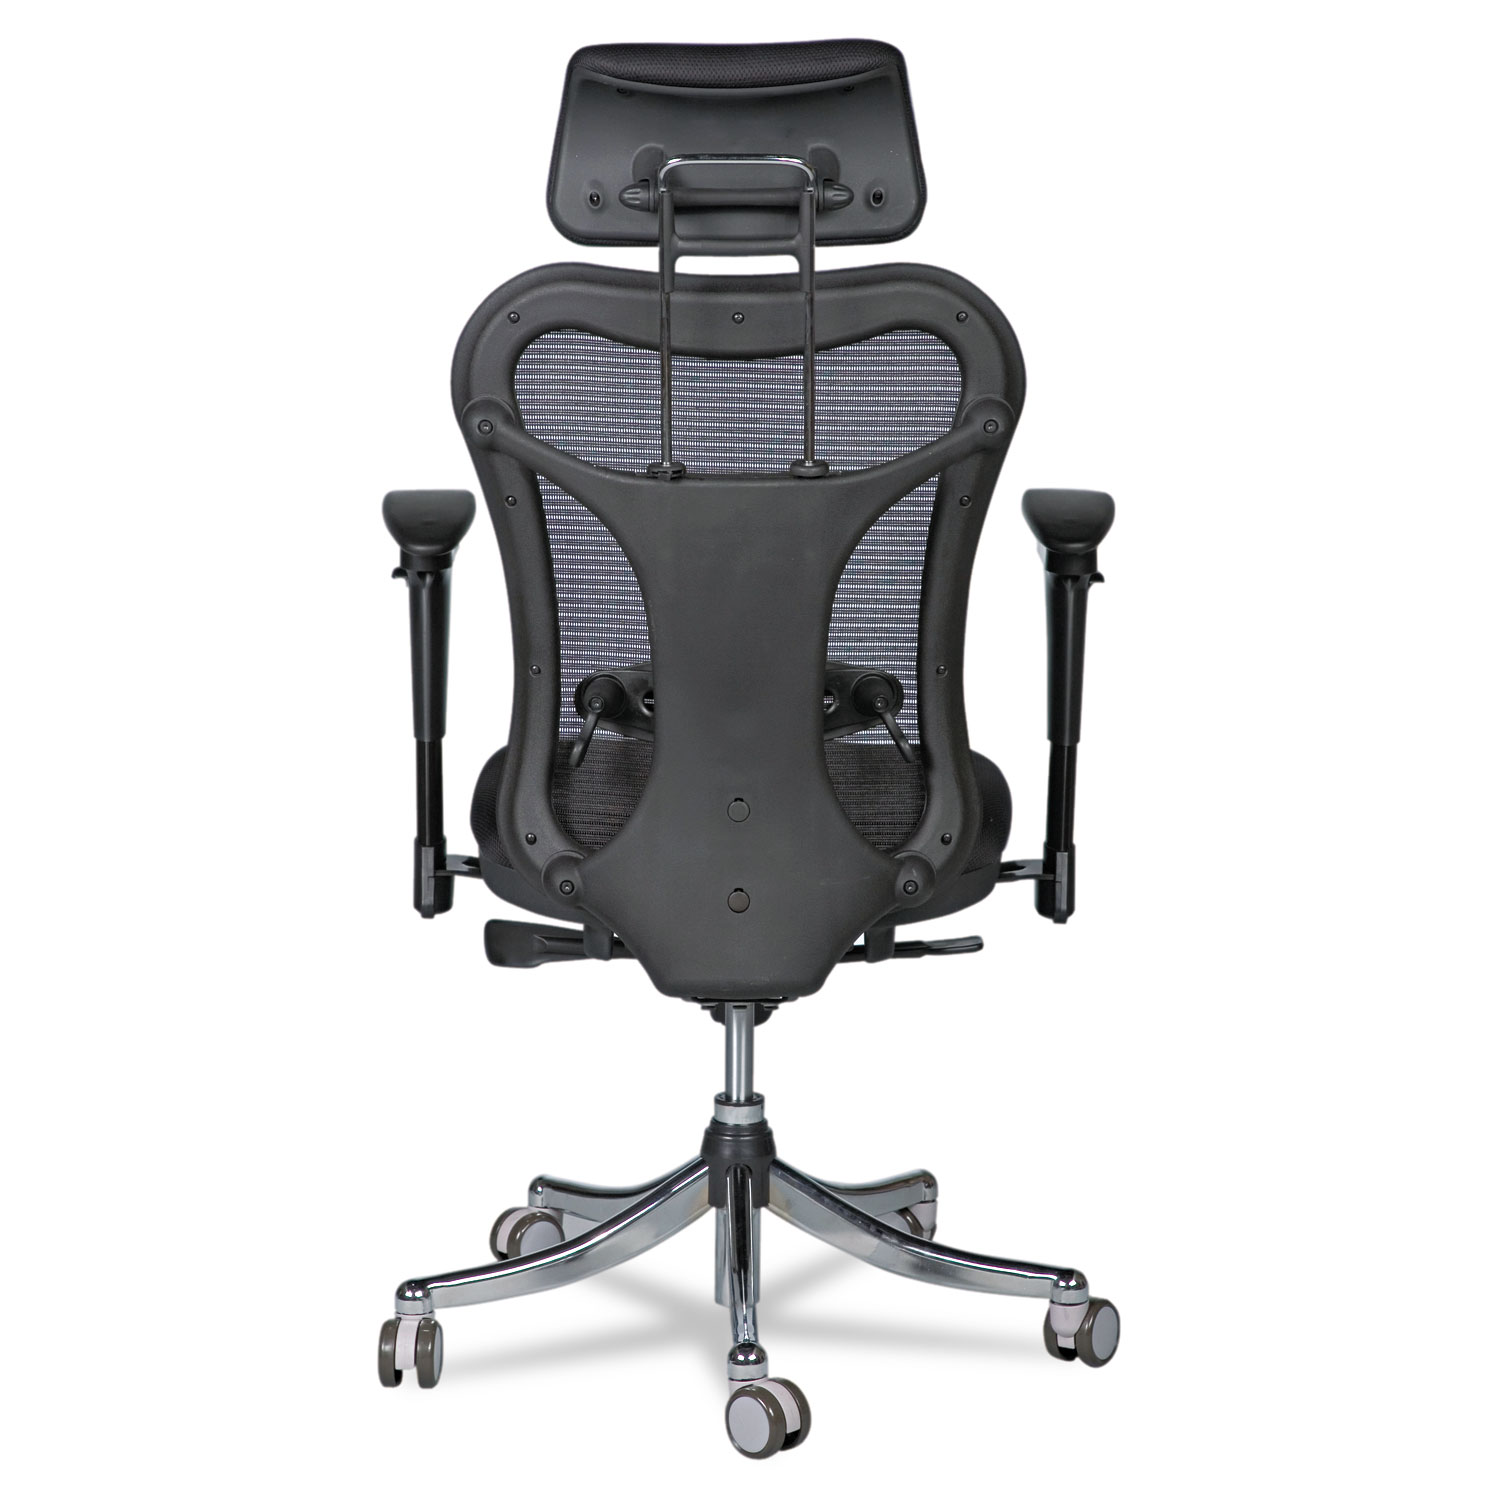 BALT Ergo Ex Executive Office Chair, Mesh Back/Upholstered Seat, Black/Chrome - image 2 of 5